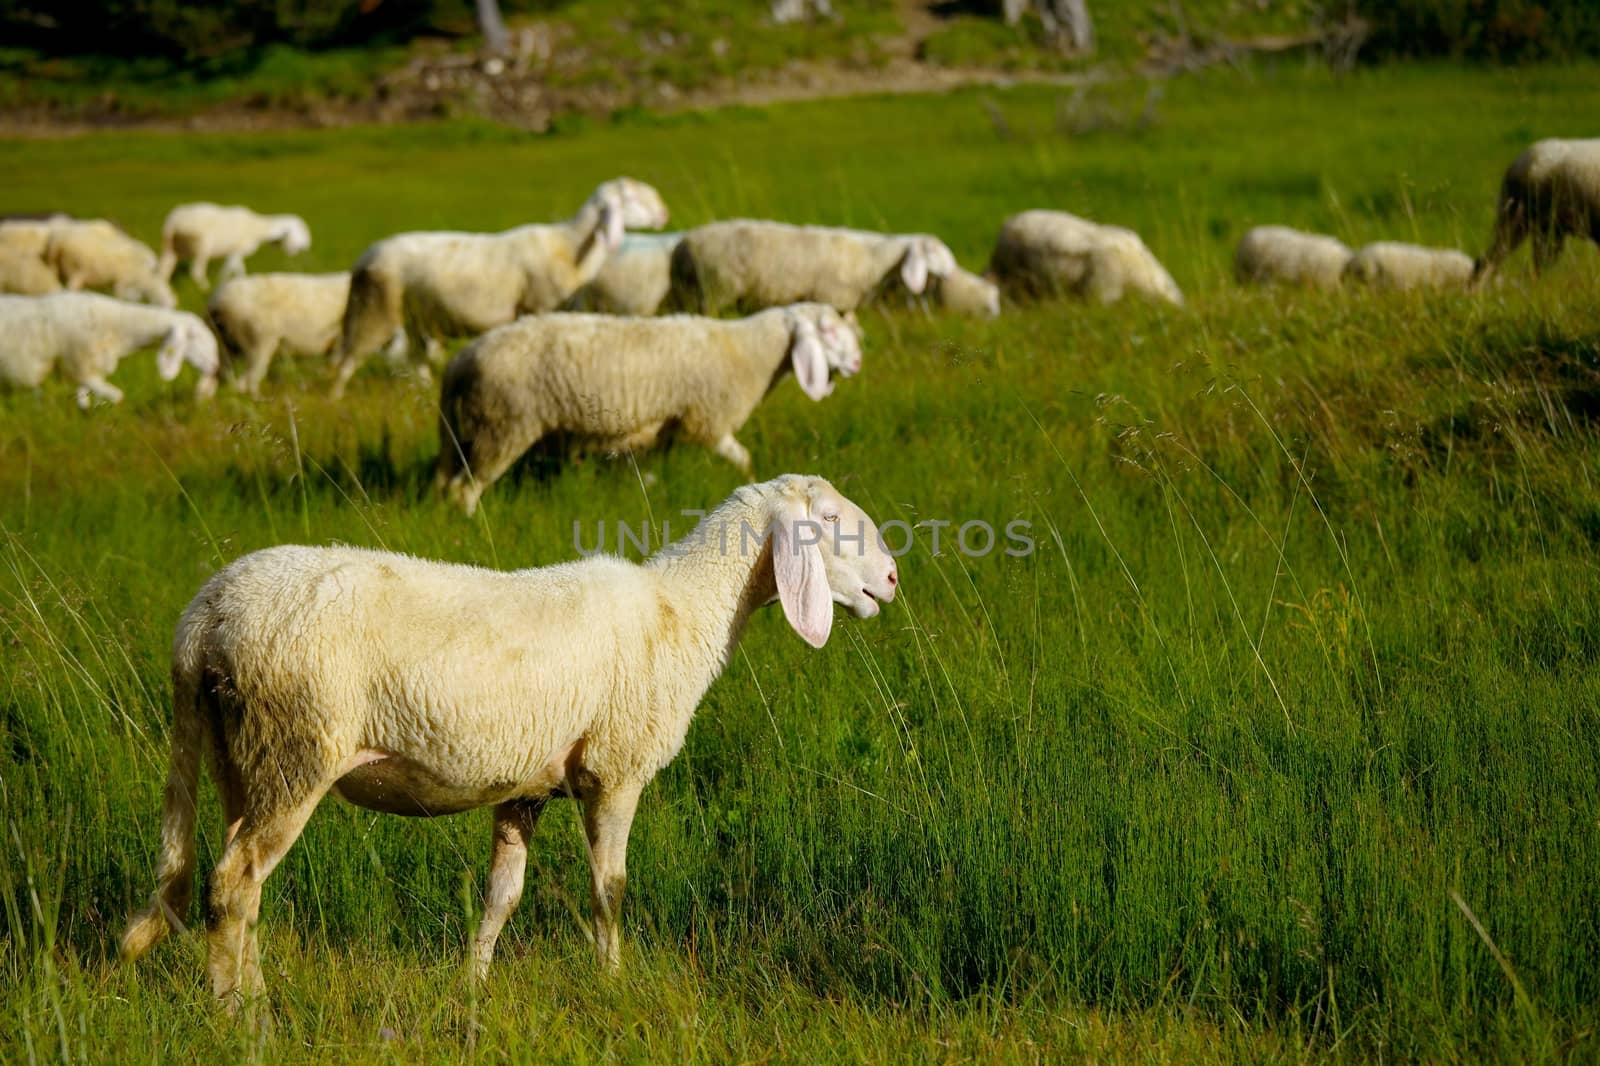 Sheep grazing on an alpine field